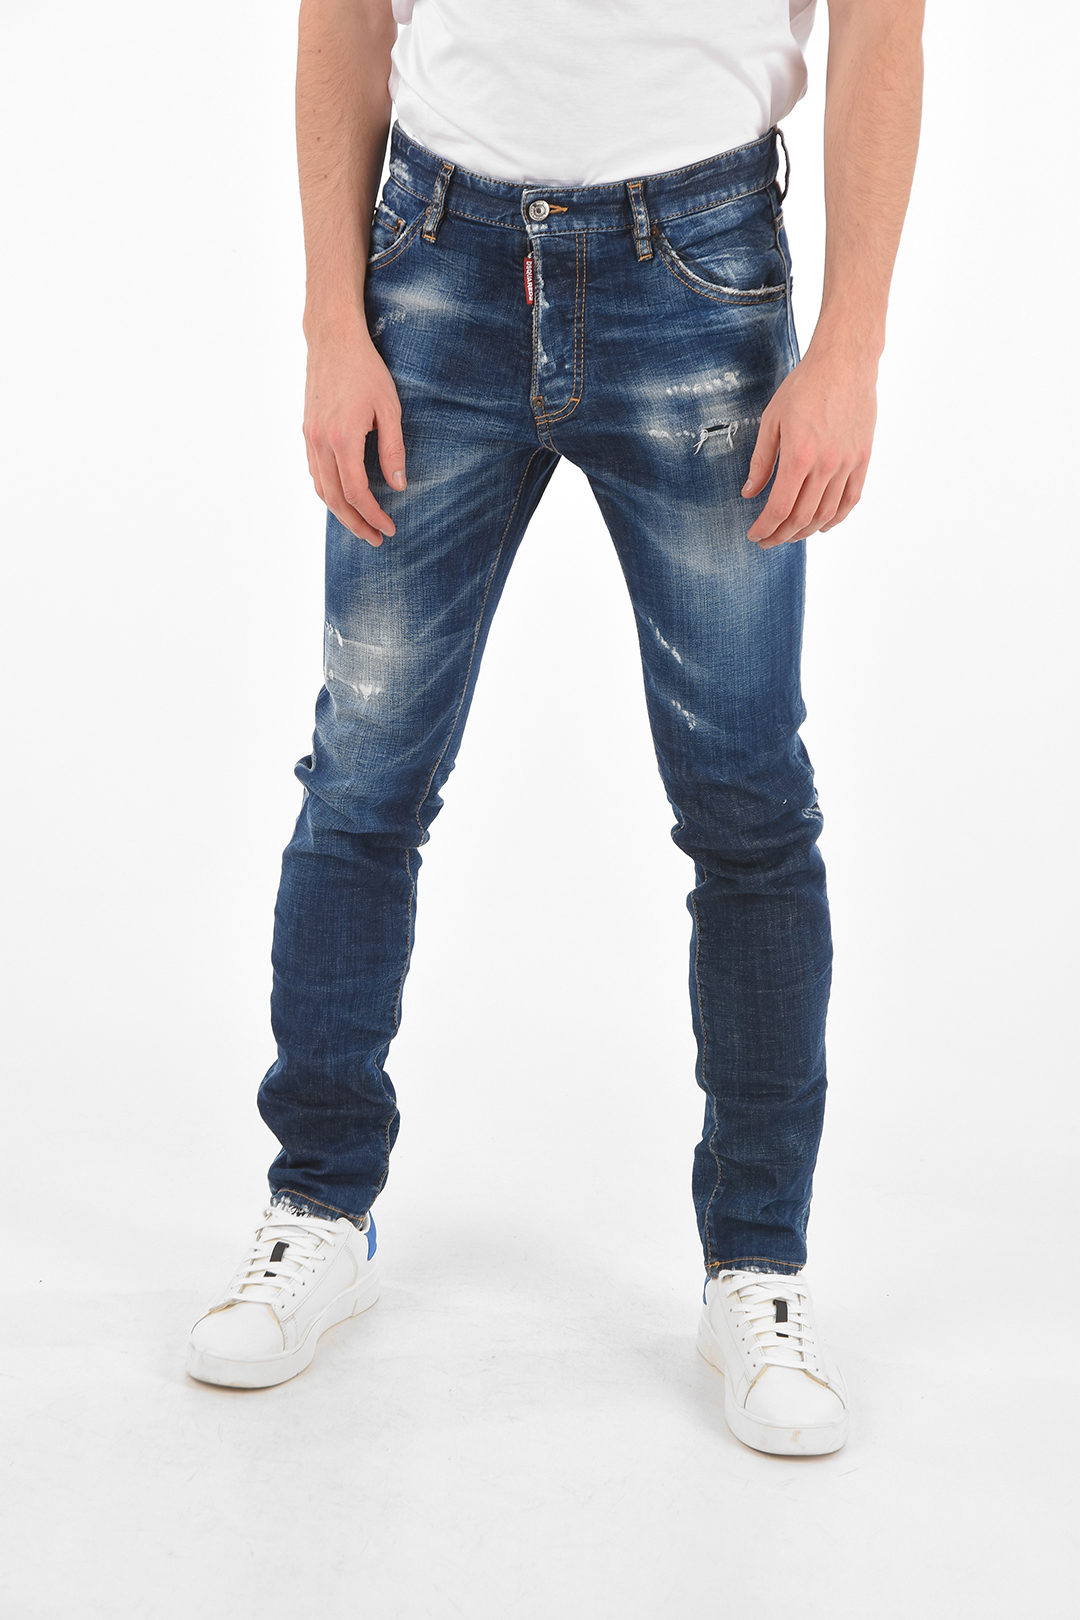 kijken fusie Verdachte Dsquared2 16cm vintage effect stretch denim COOL GUY jeans men - Glamood  Outlet